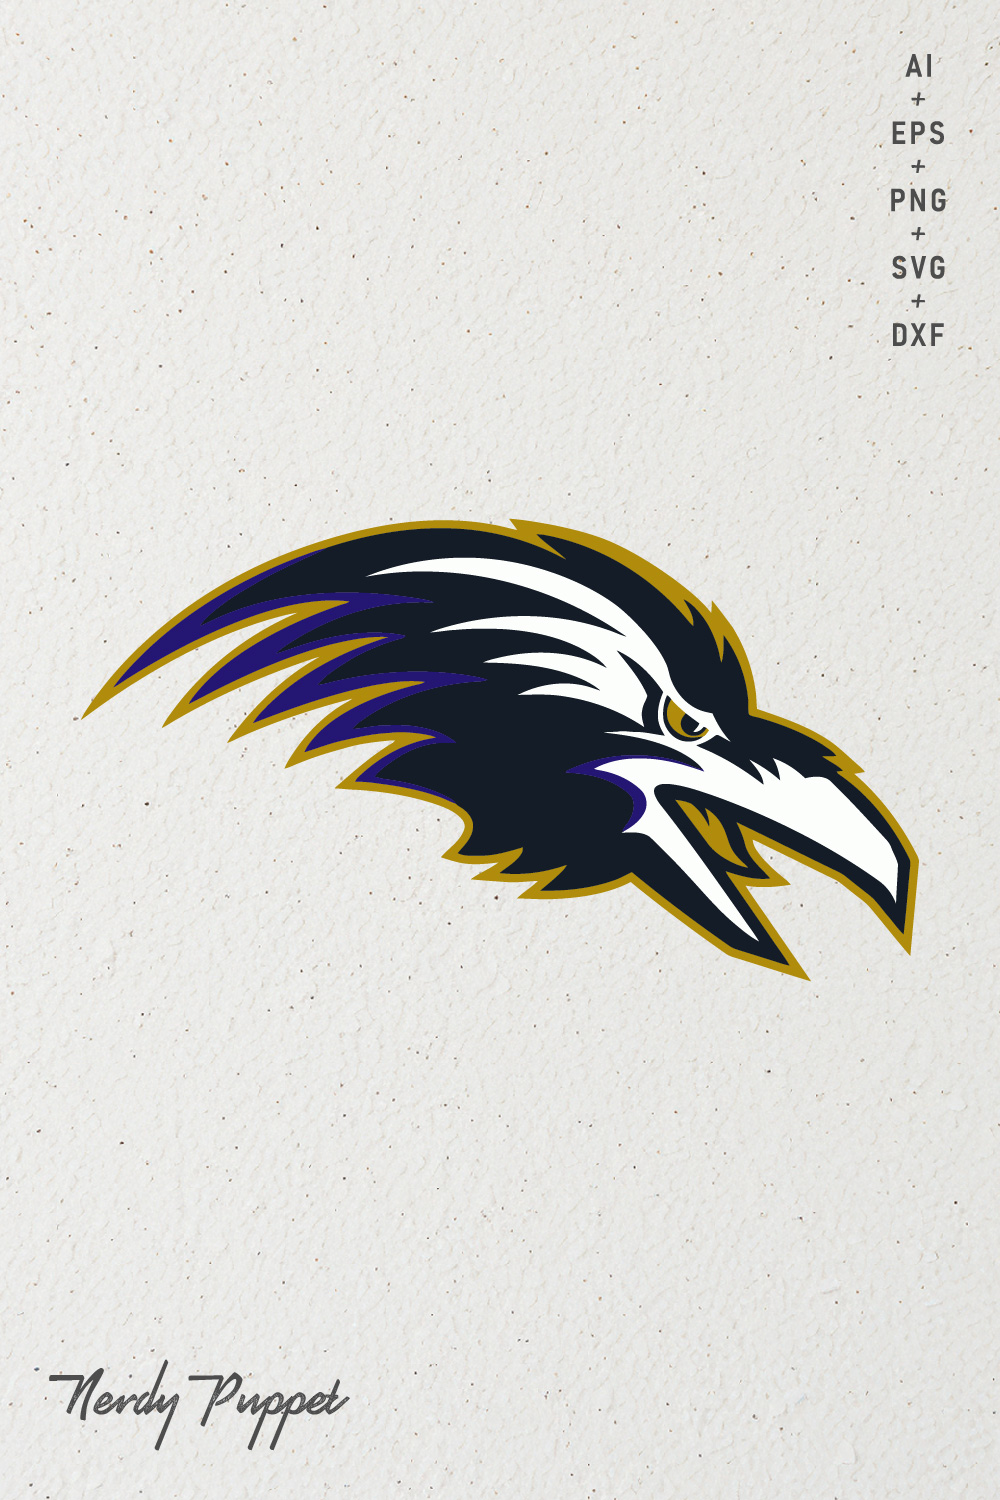 Baltimore Ravens 12 pinterest preview image.